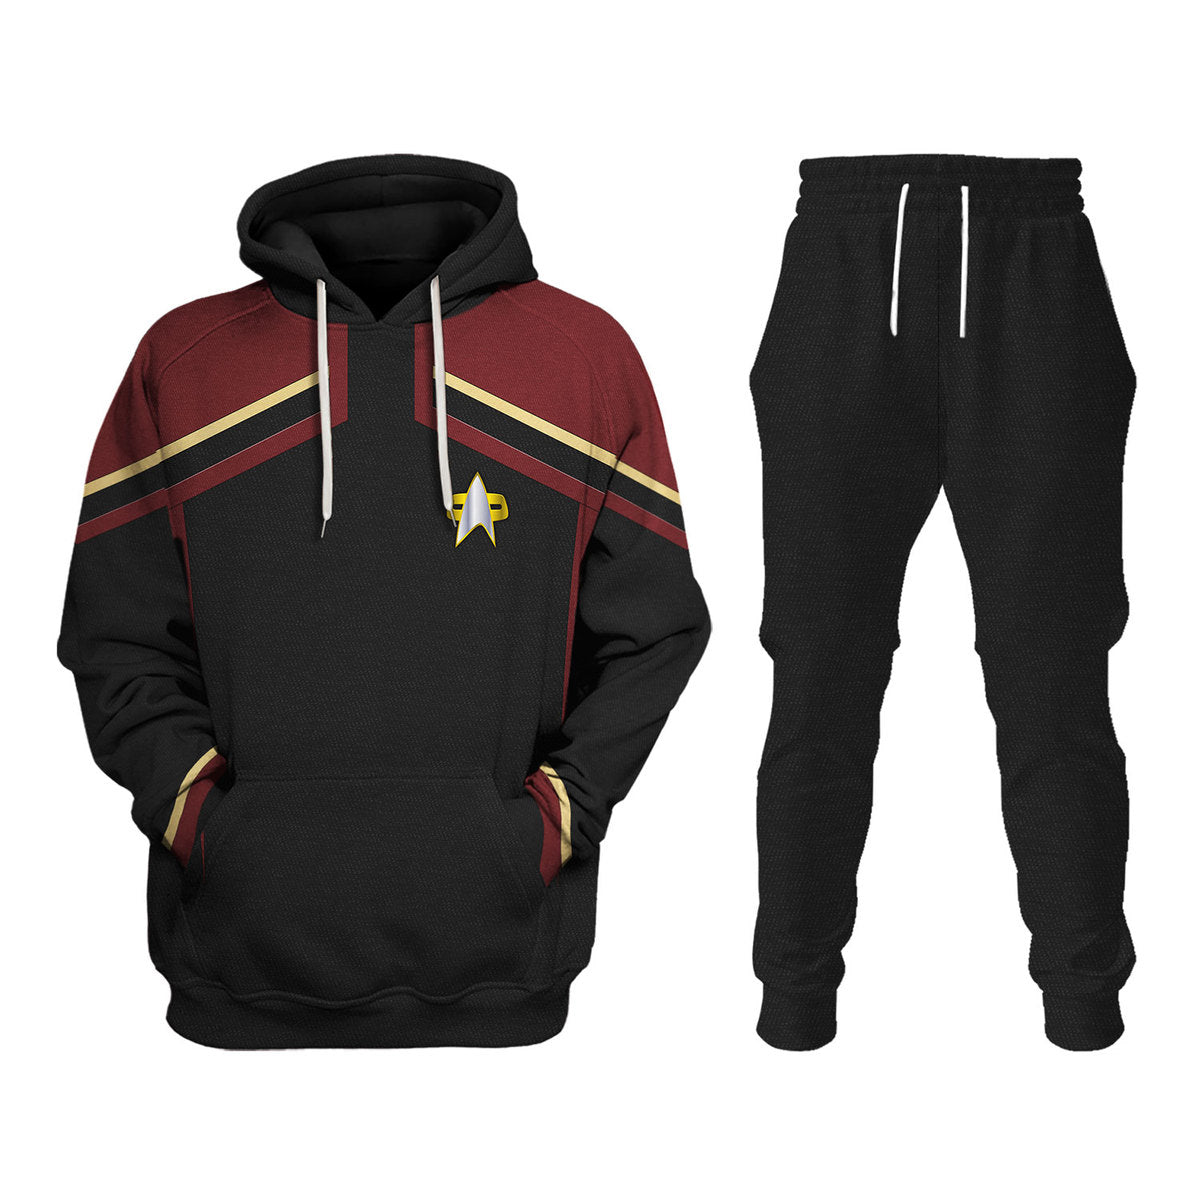 Starfleet Uniform track suit 